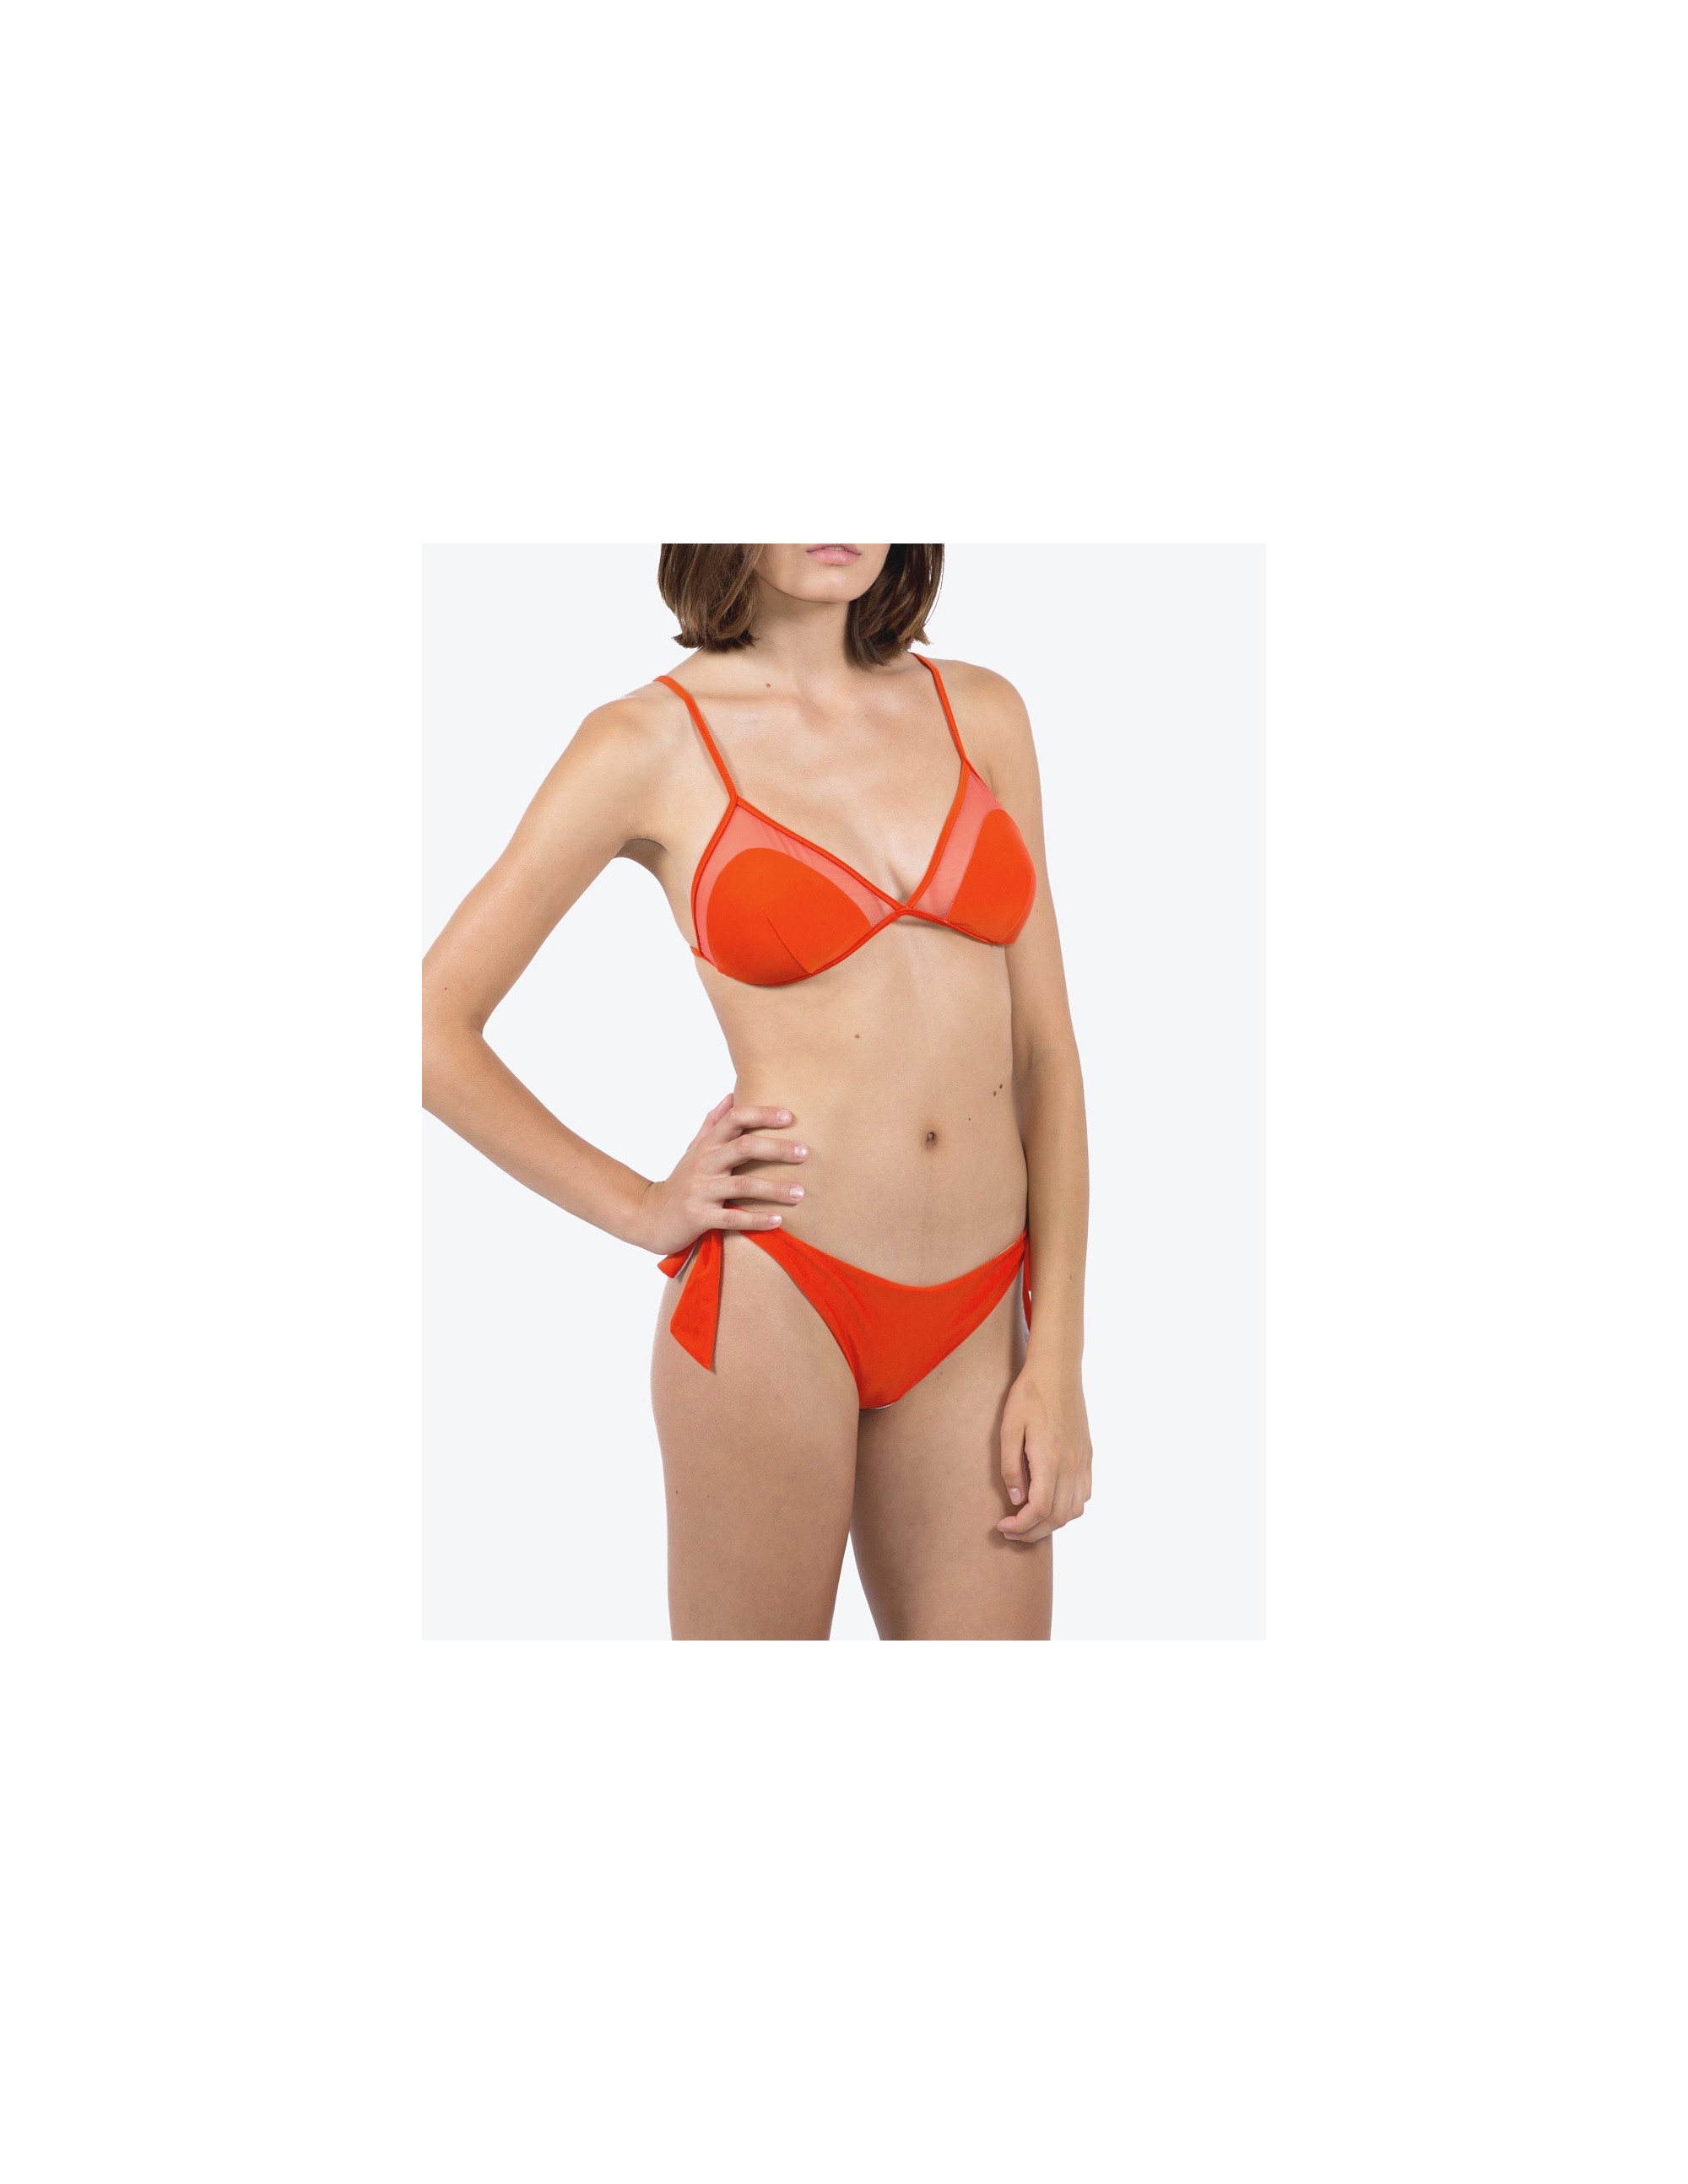 JAZ bikini top - CHARACTER RED